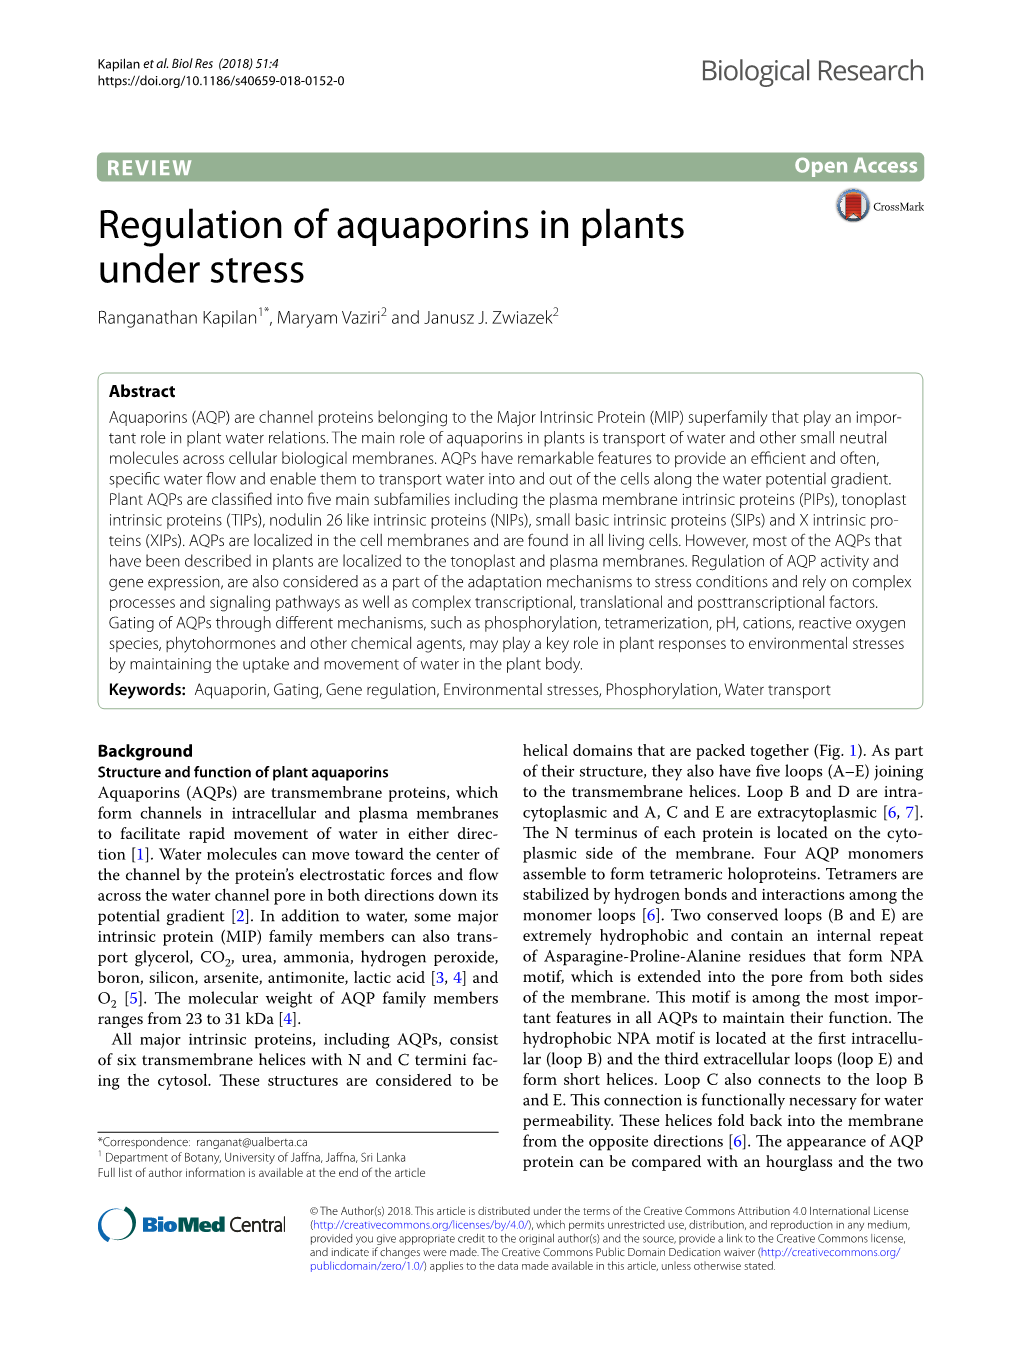 Regulation of Aquaporins in Plants Under Stress Ranganathan Kapilan1*, Maryam Vaziri2 and Janusz J